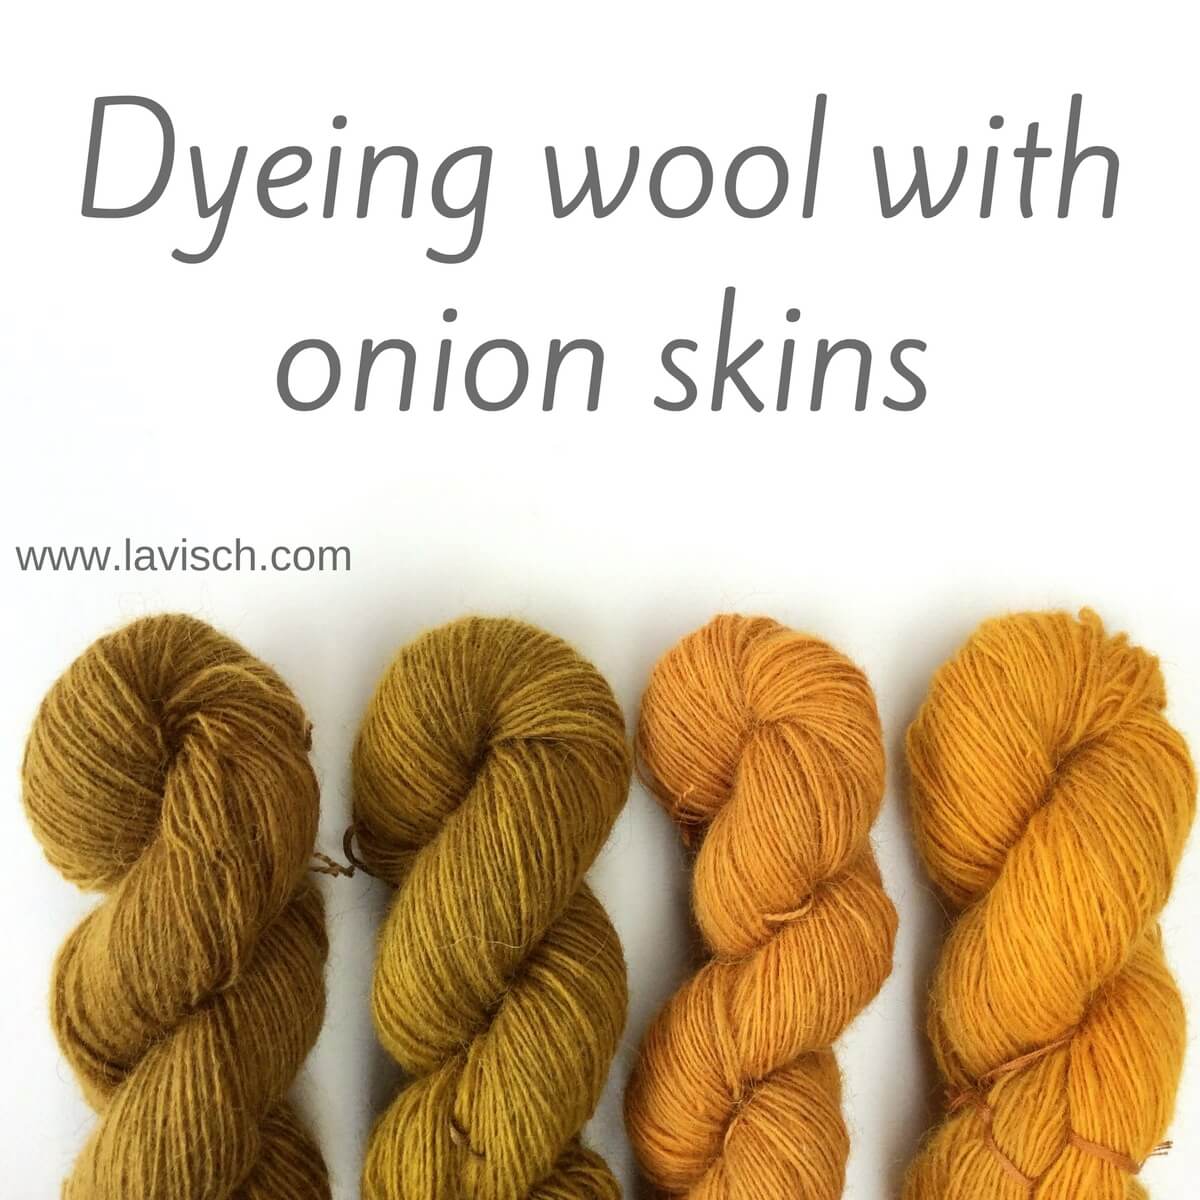 Onion Skin for Natural Dye, Vegetable Dye for Textile